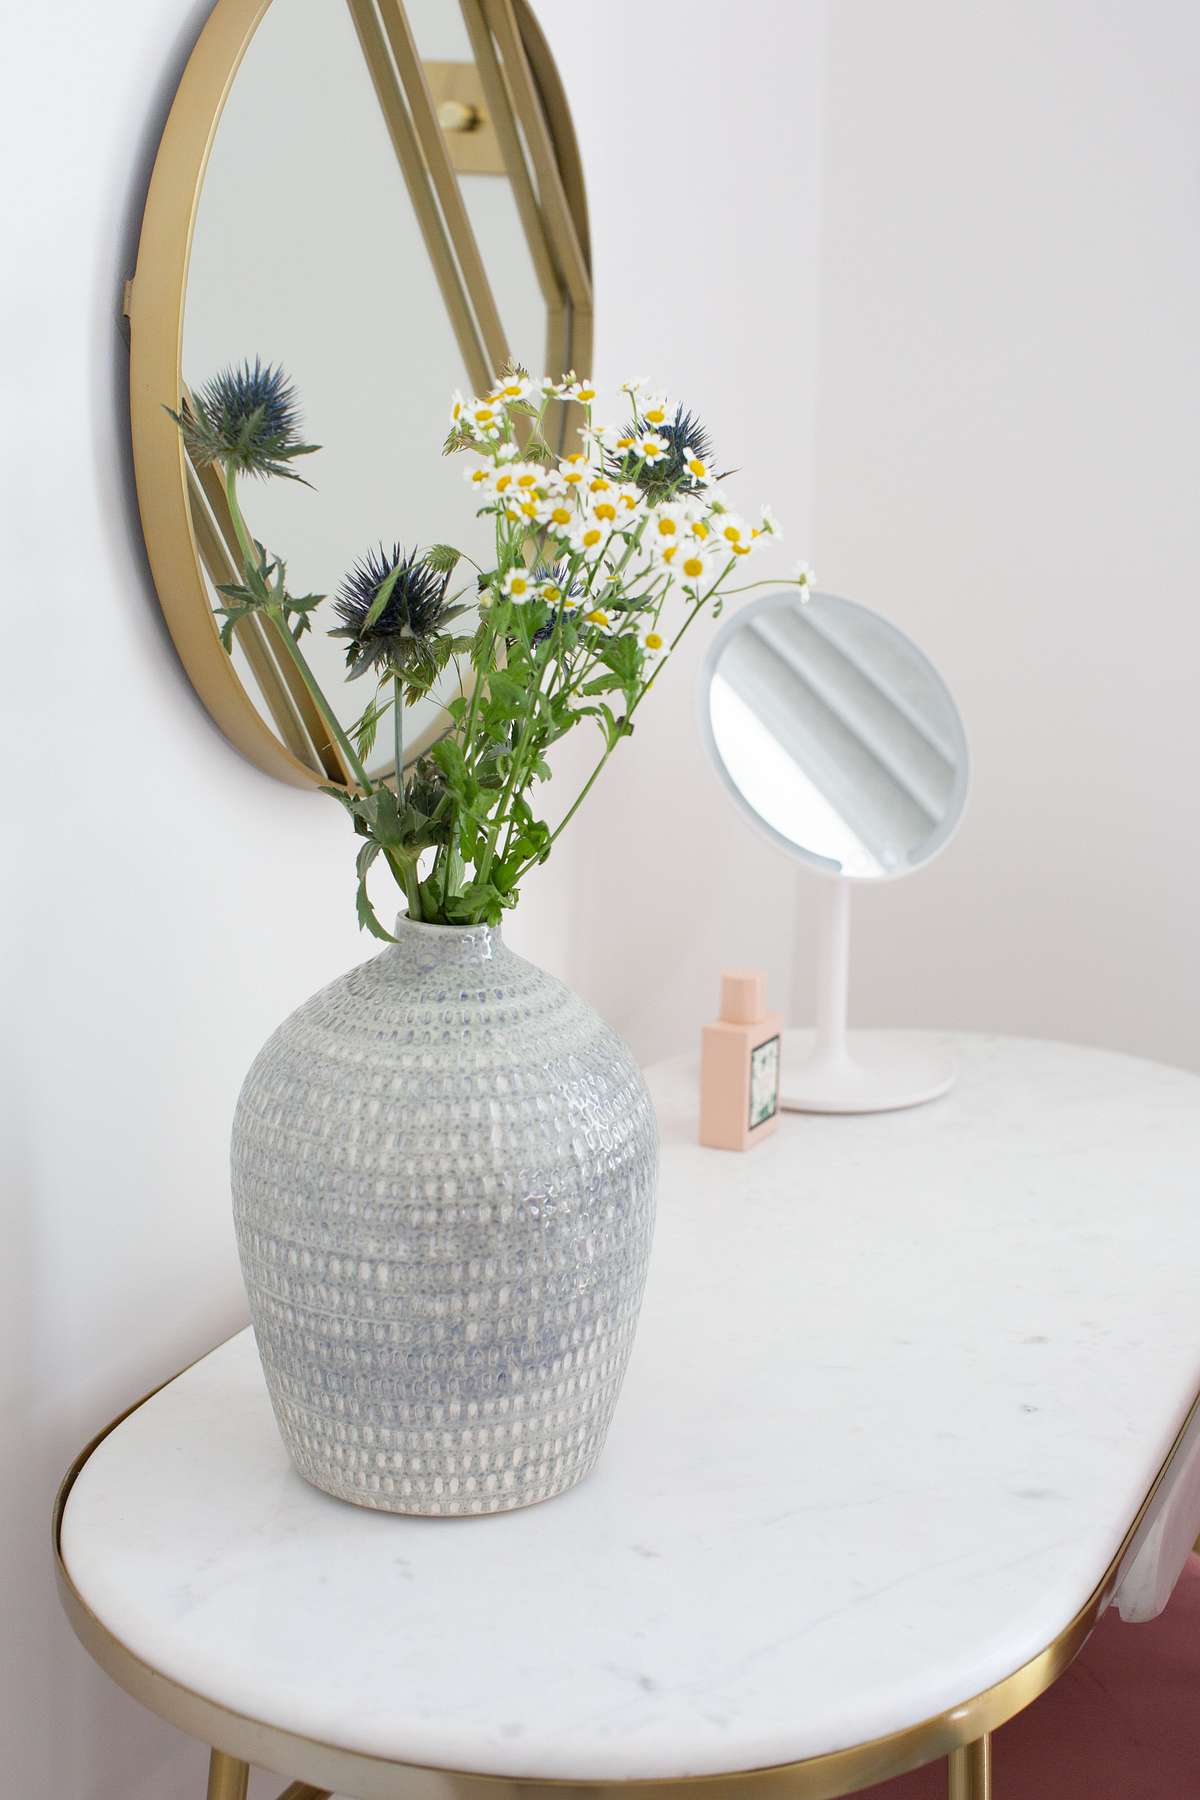 make-up desk with vase of flowers